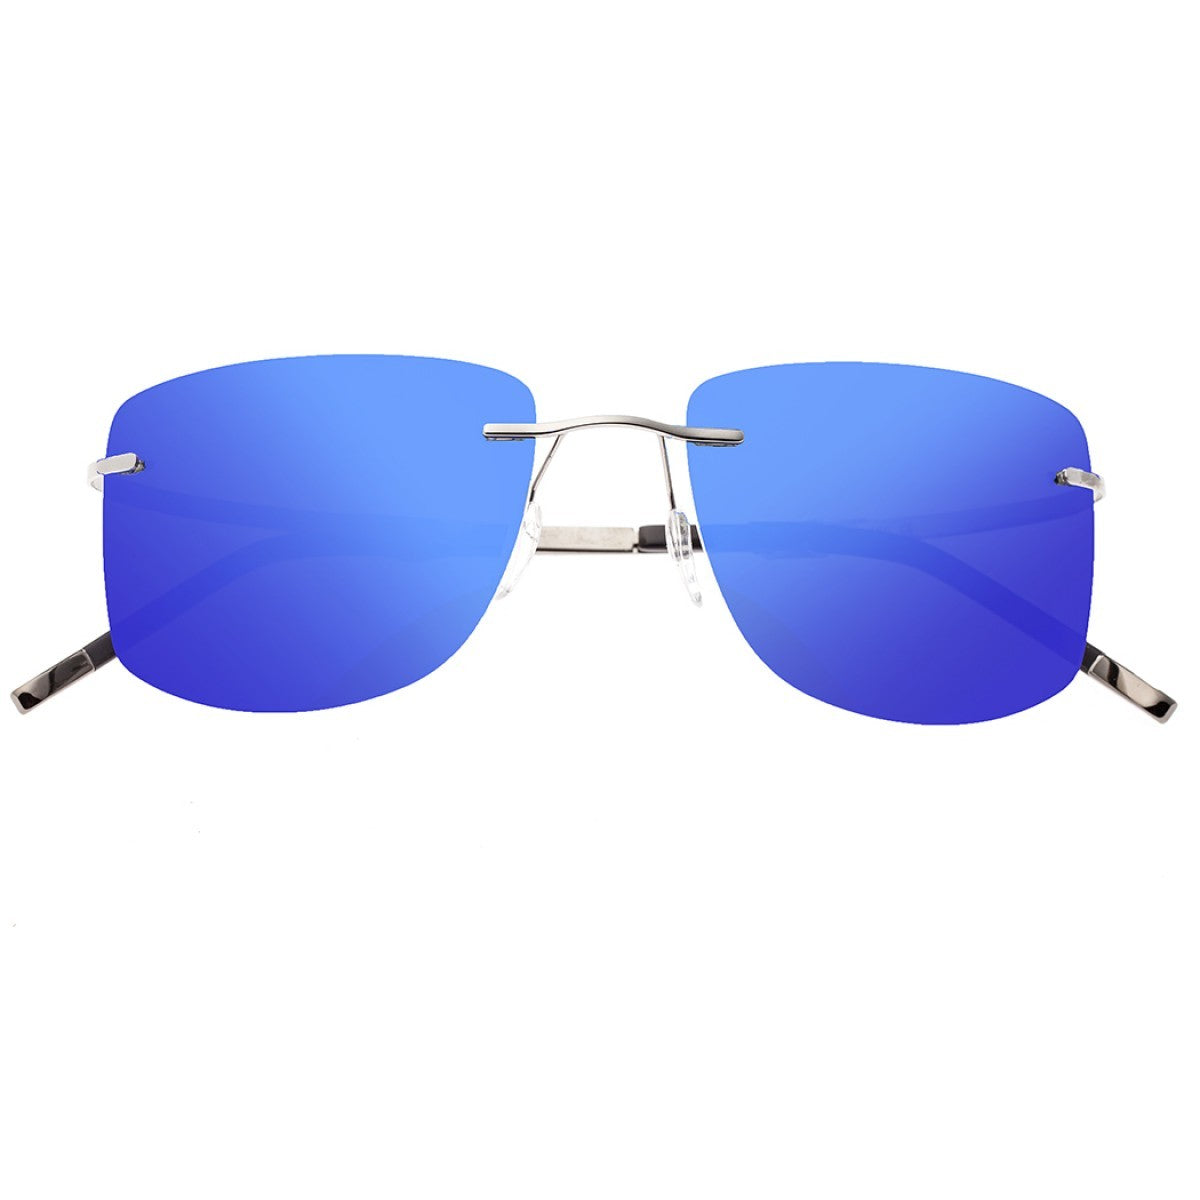 Breed Aero Polarized Sunglasses - Gunmetal/Purple-Blue - BSG041GM